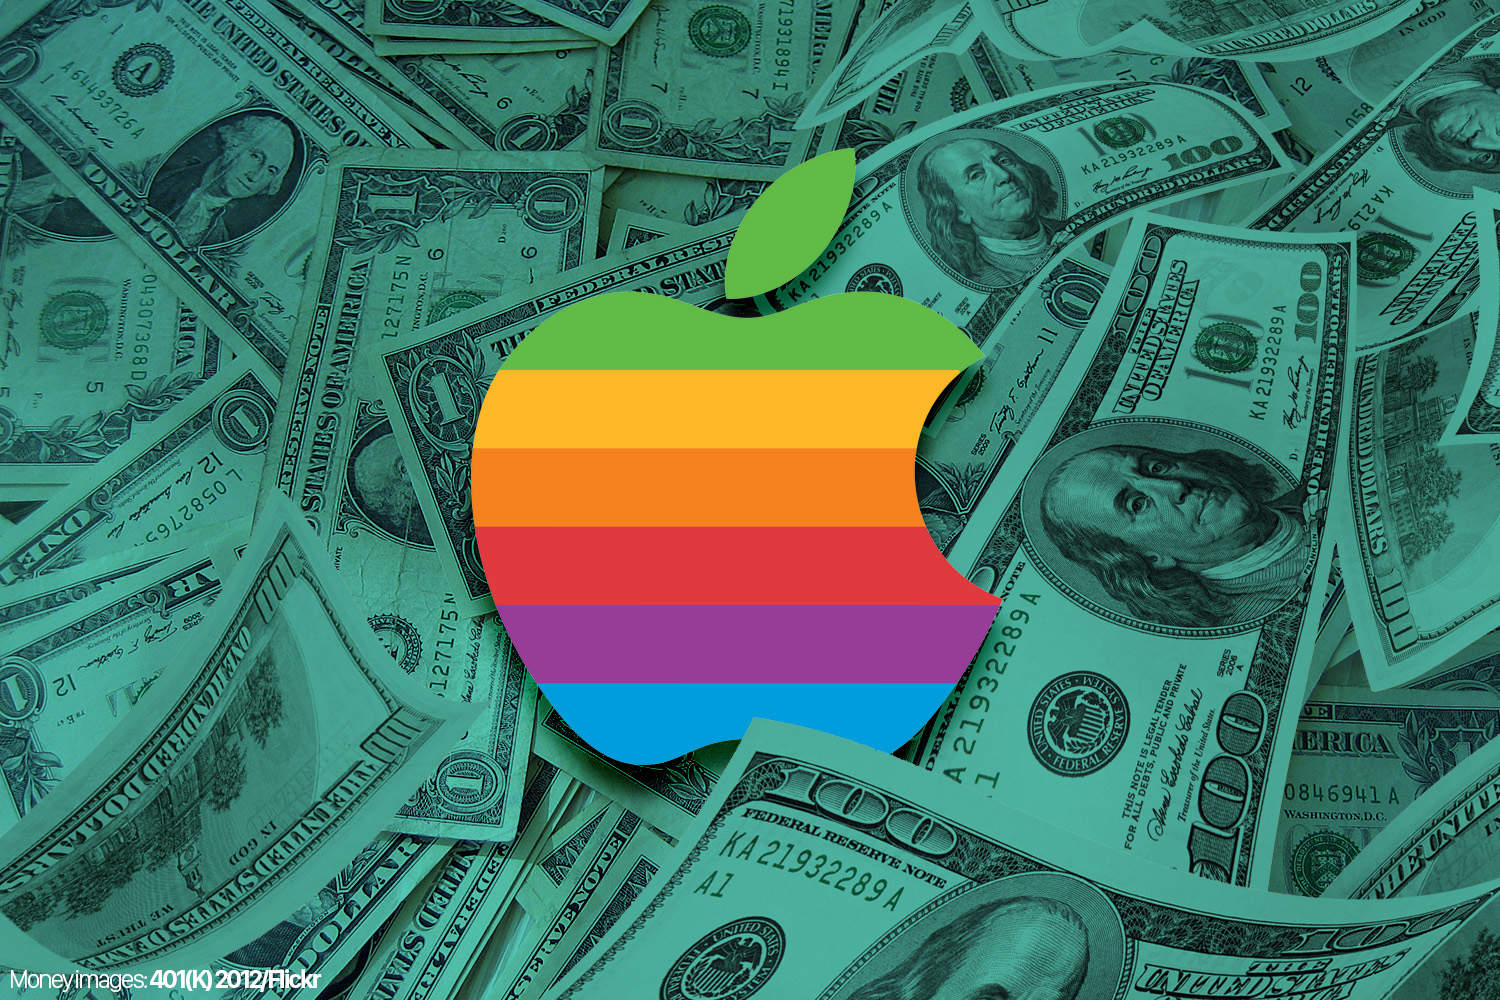 Apple is unimaginably profitable